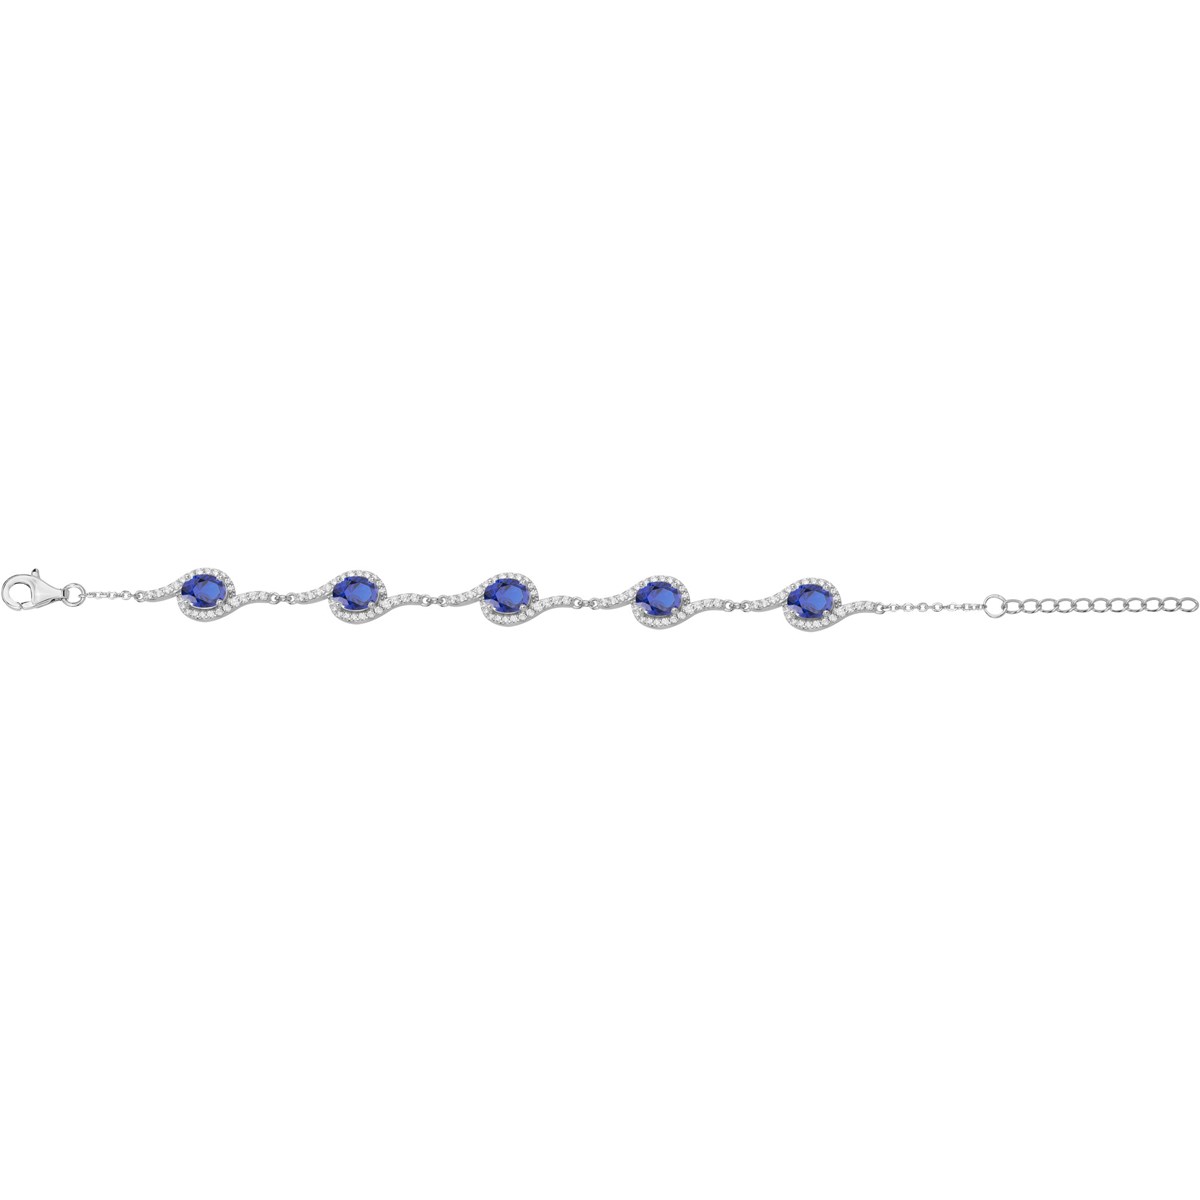 Bracelet en Argent avec spinelle bleu saphir